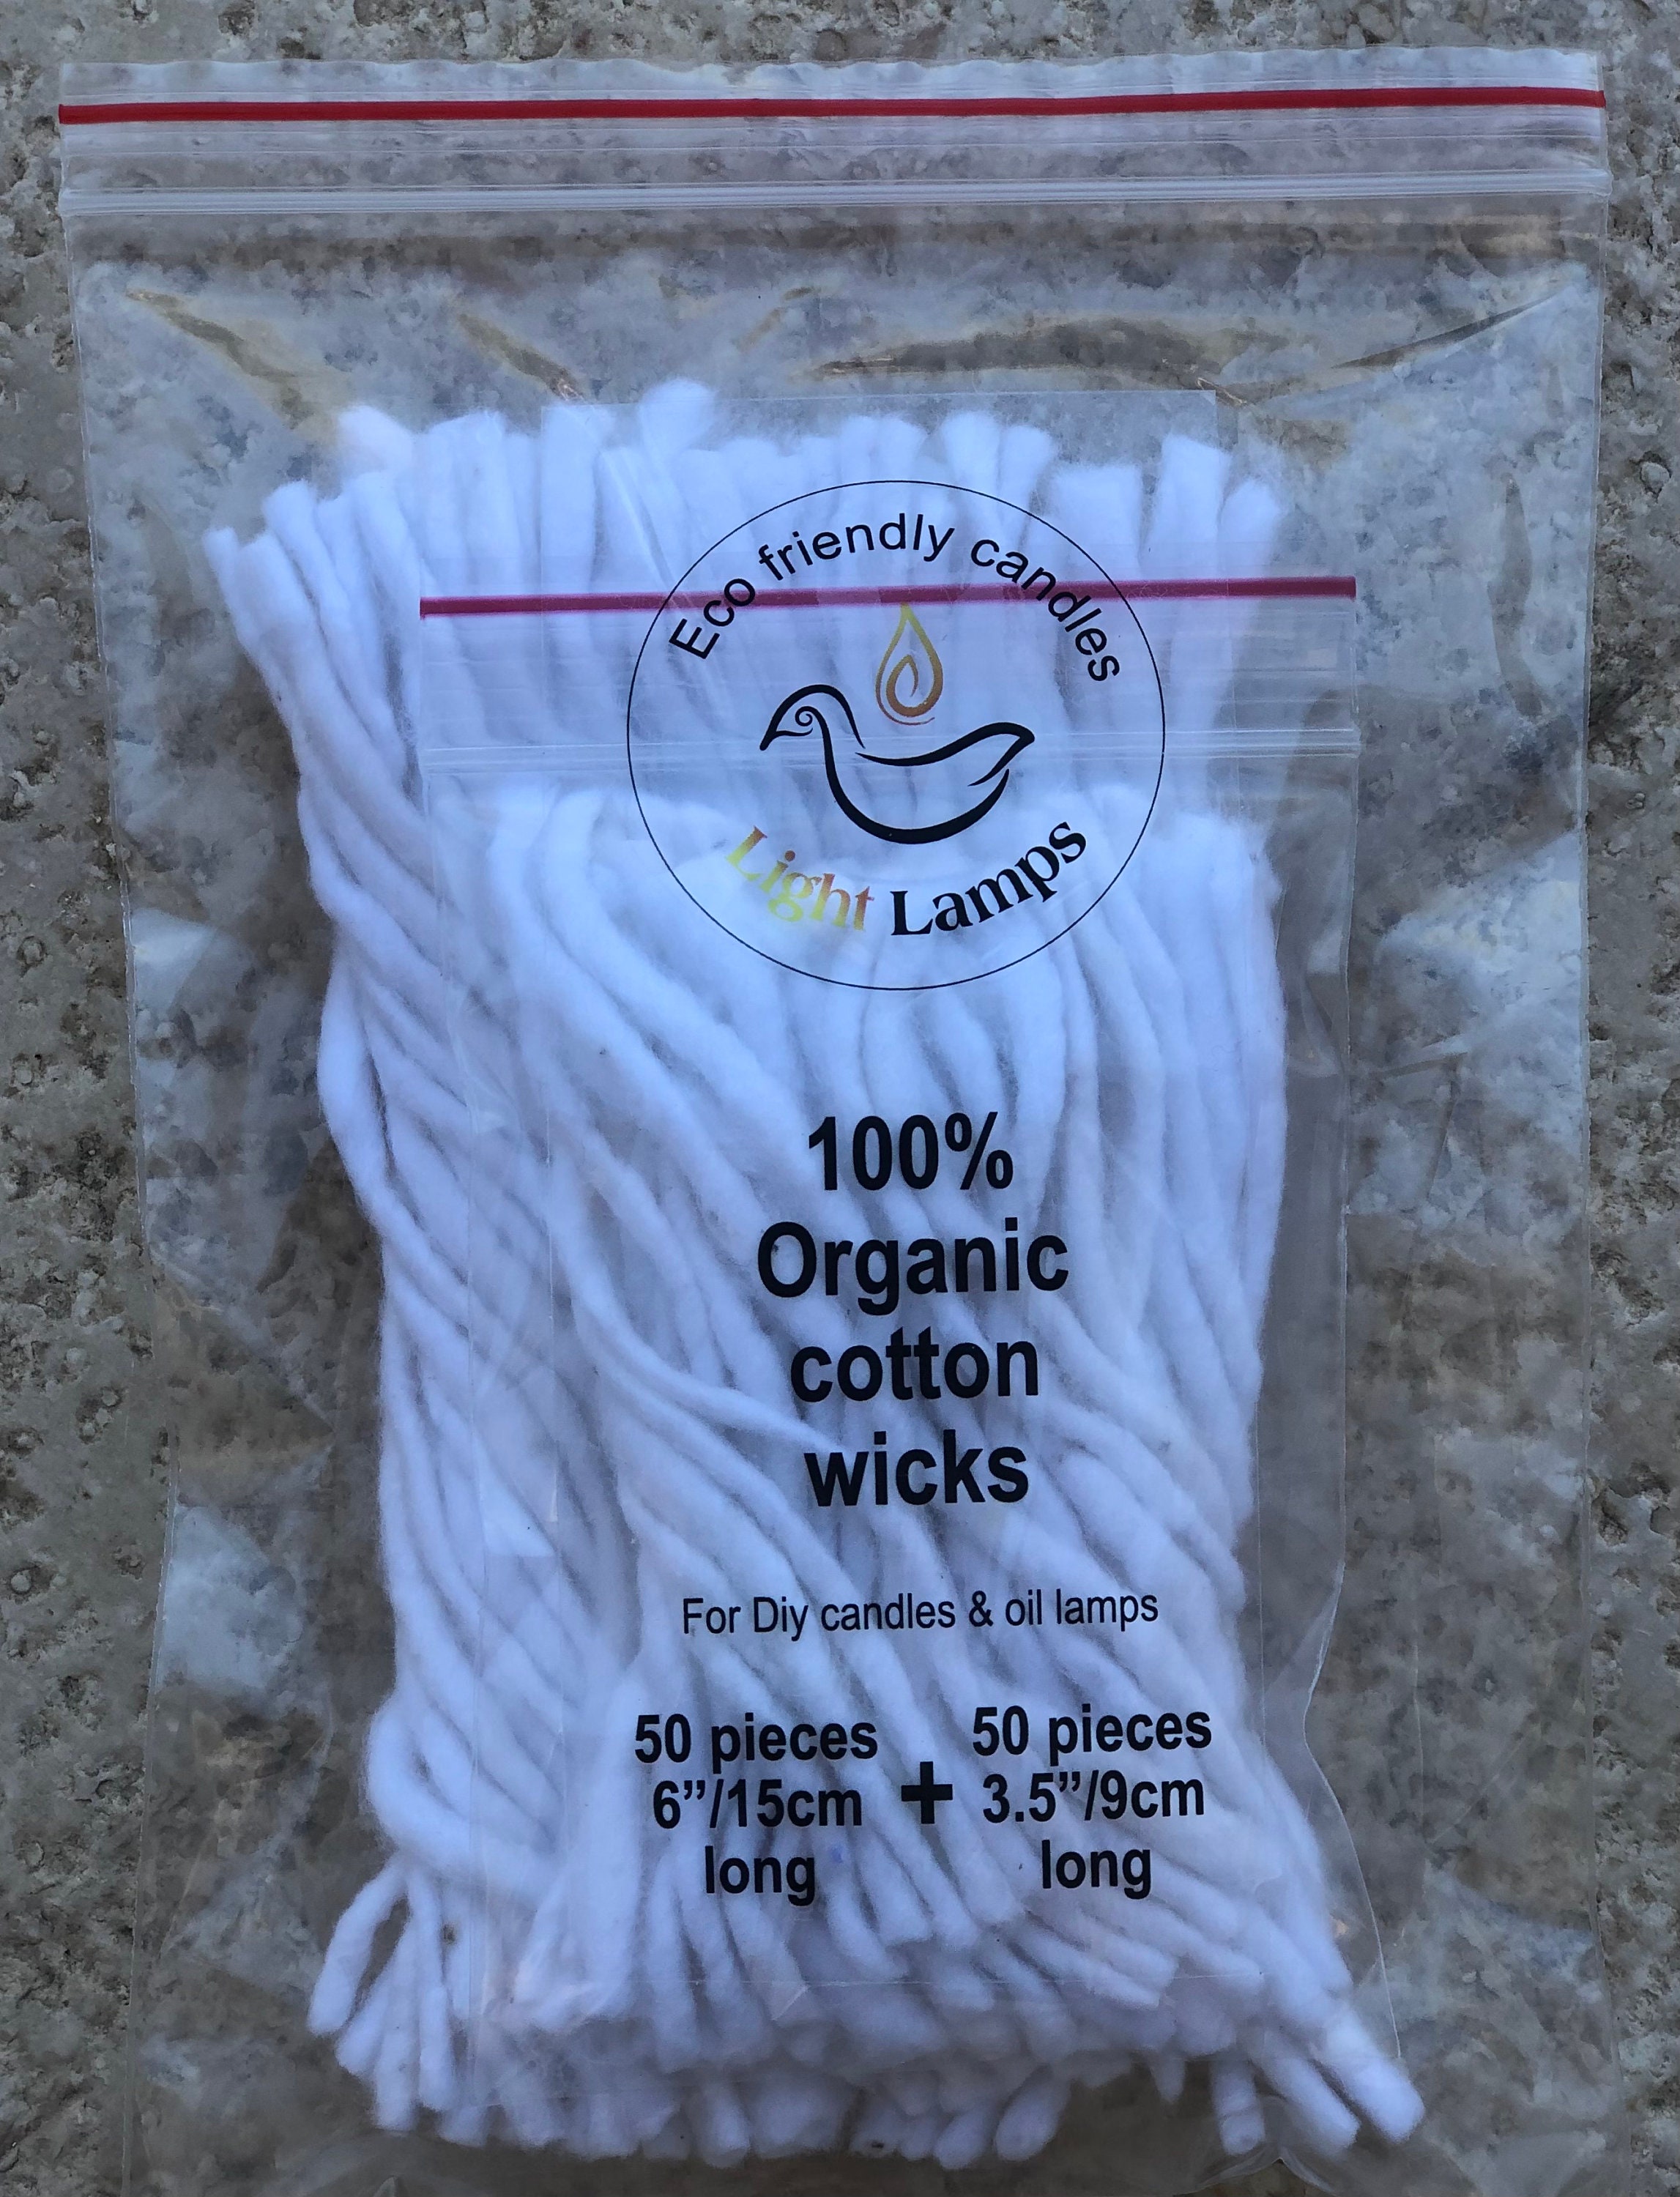 150 Cotton Wicks 3.5/9cm, Organic Cotton Wicks for Myanmar